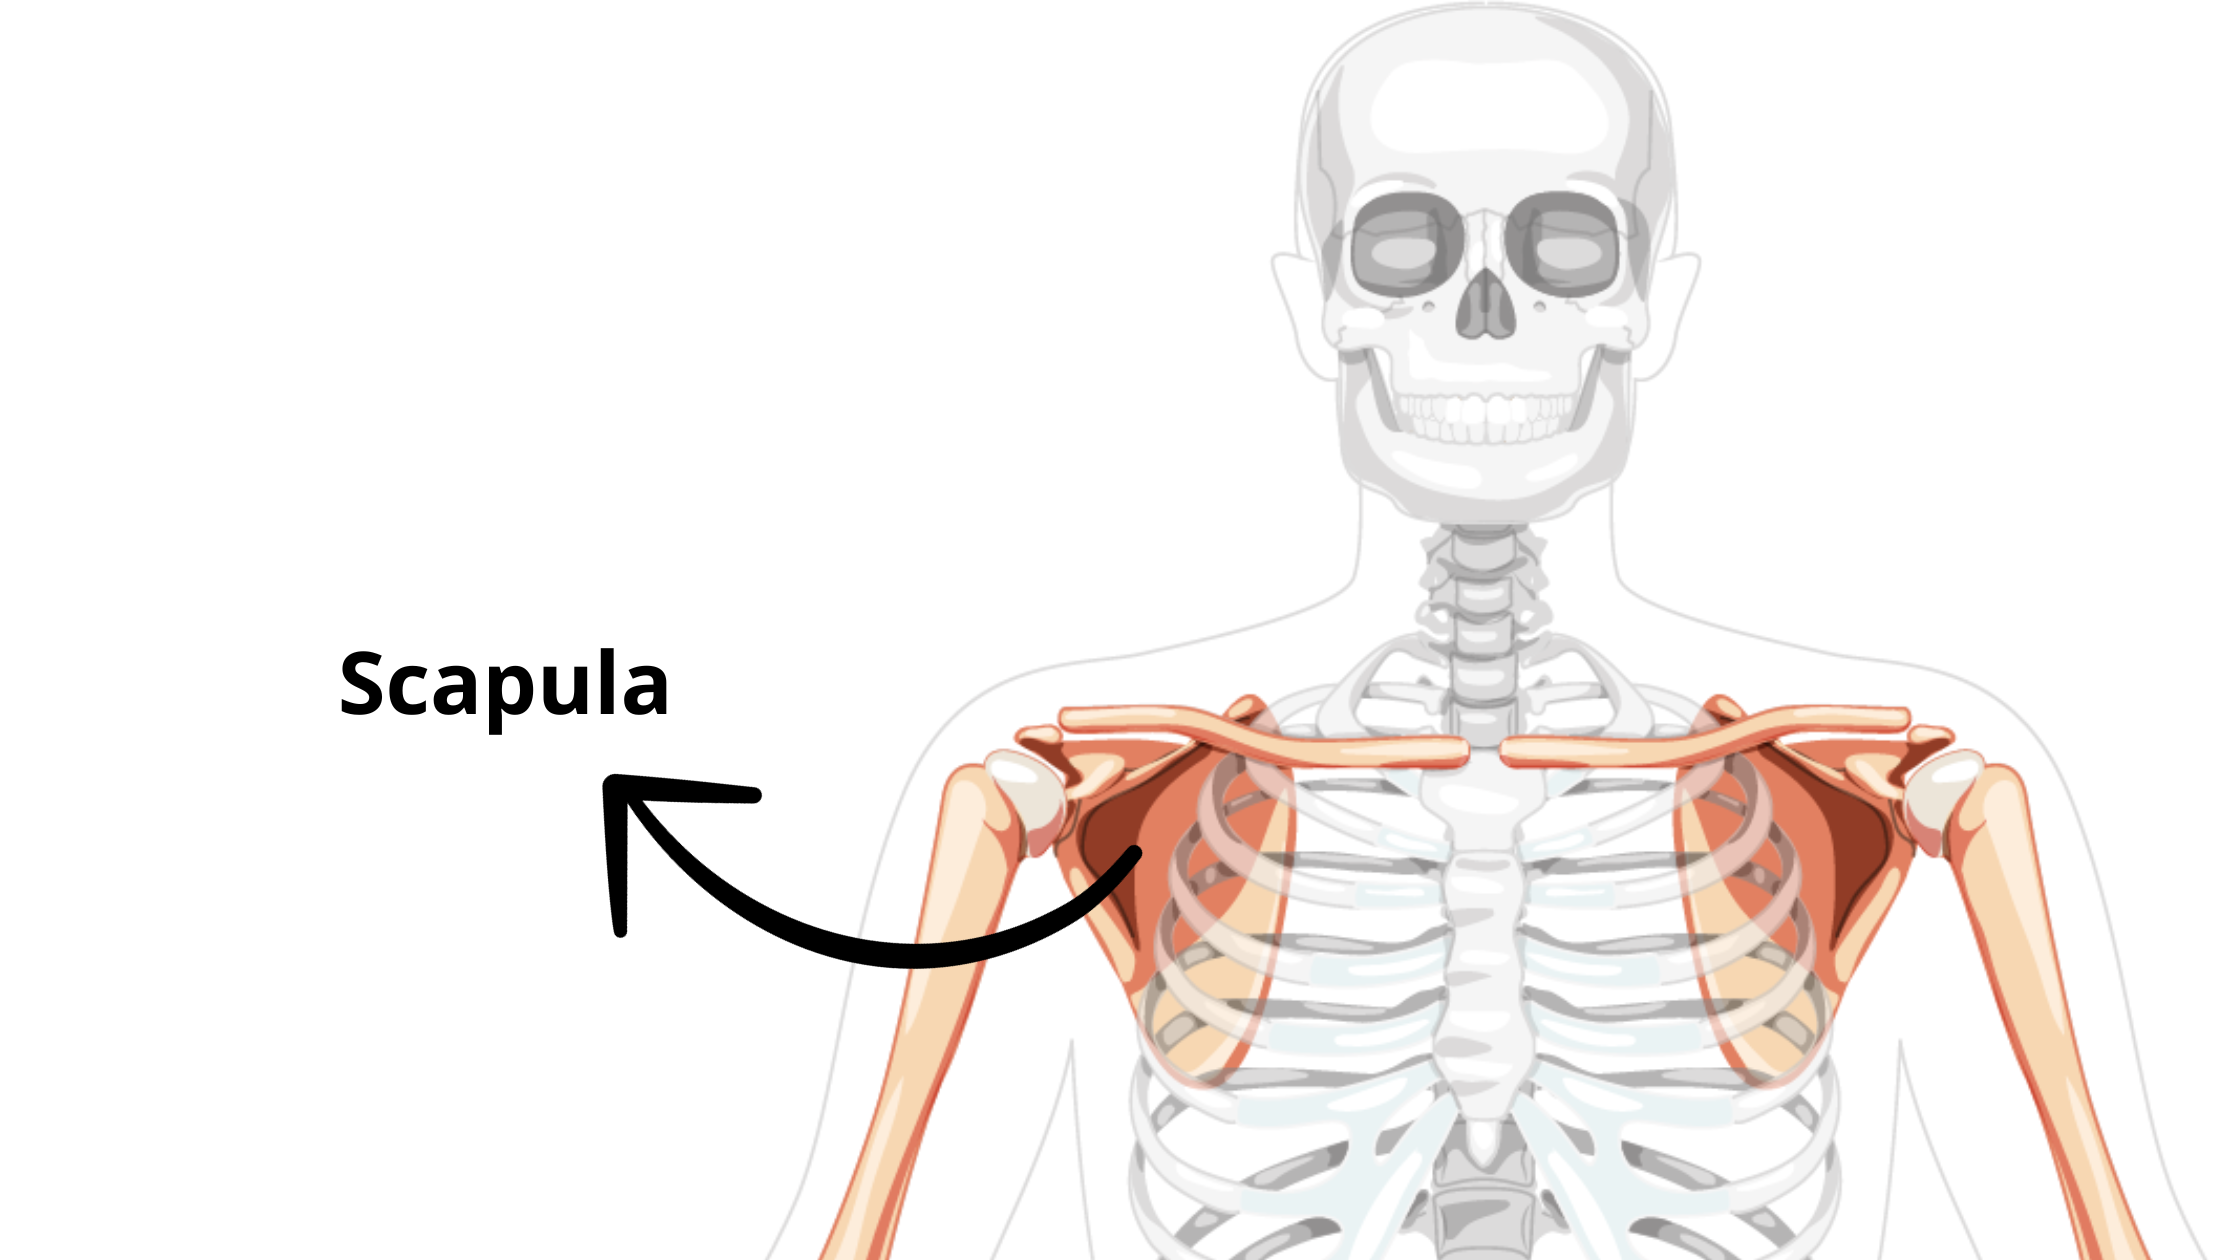 Scapula bone graphic